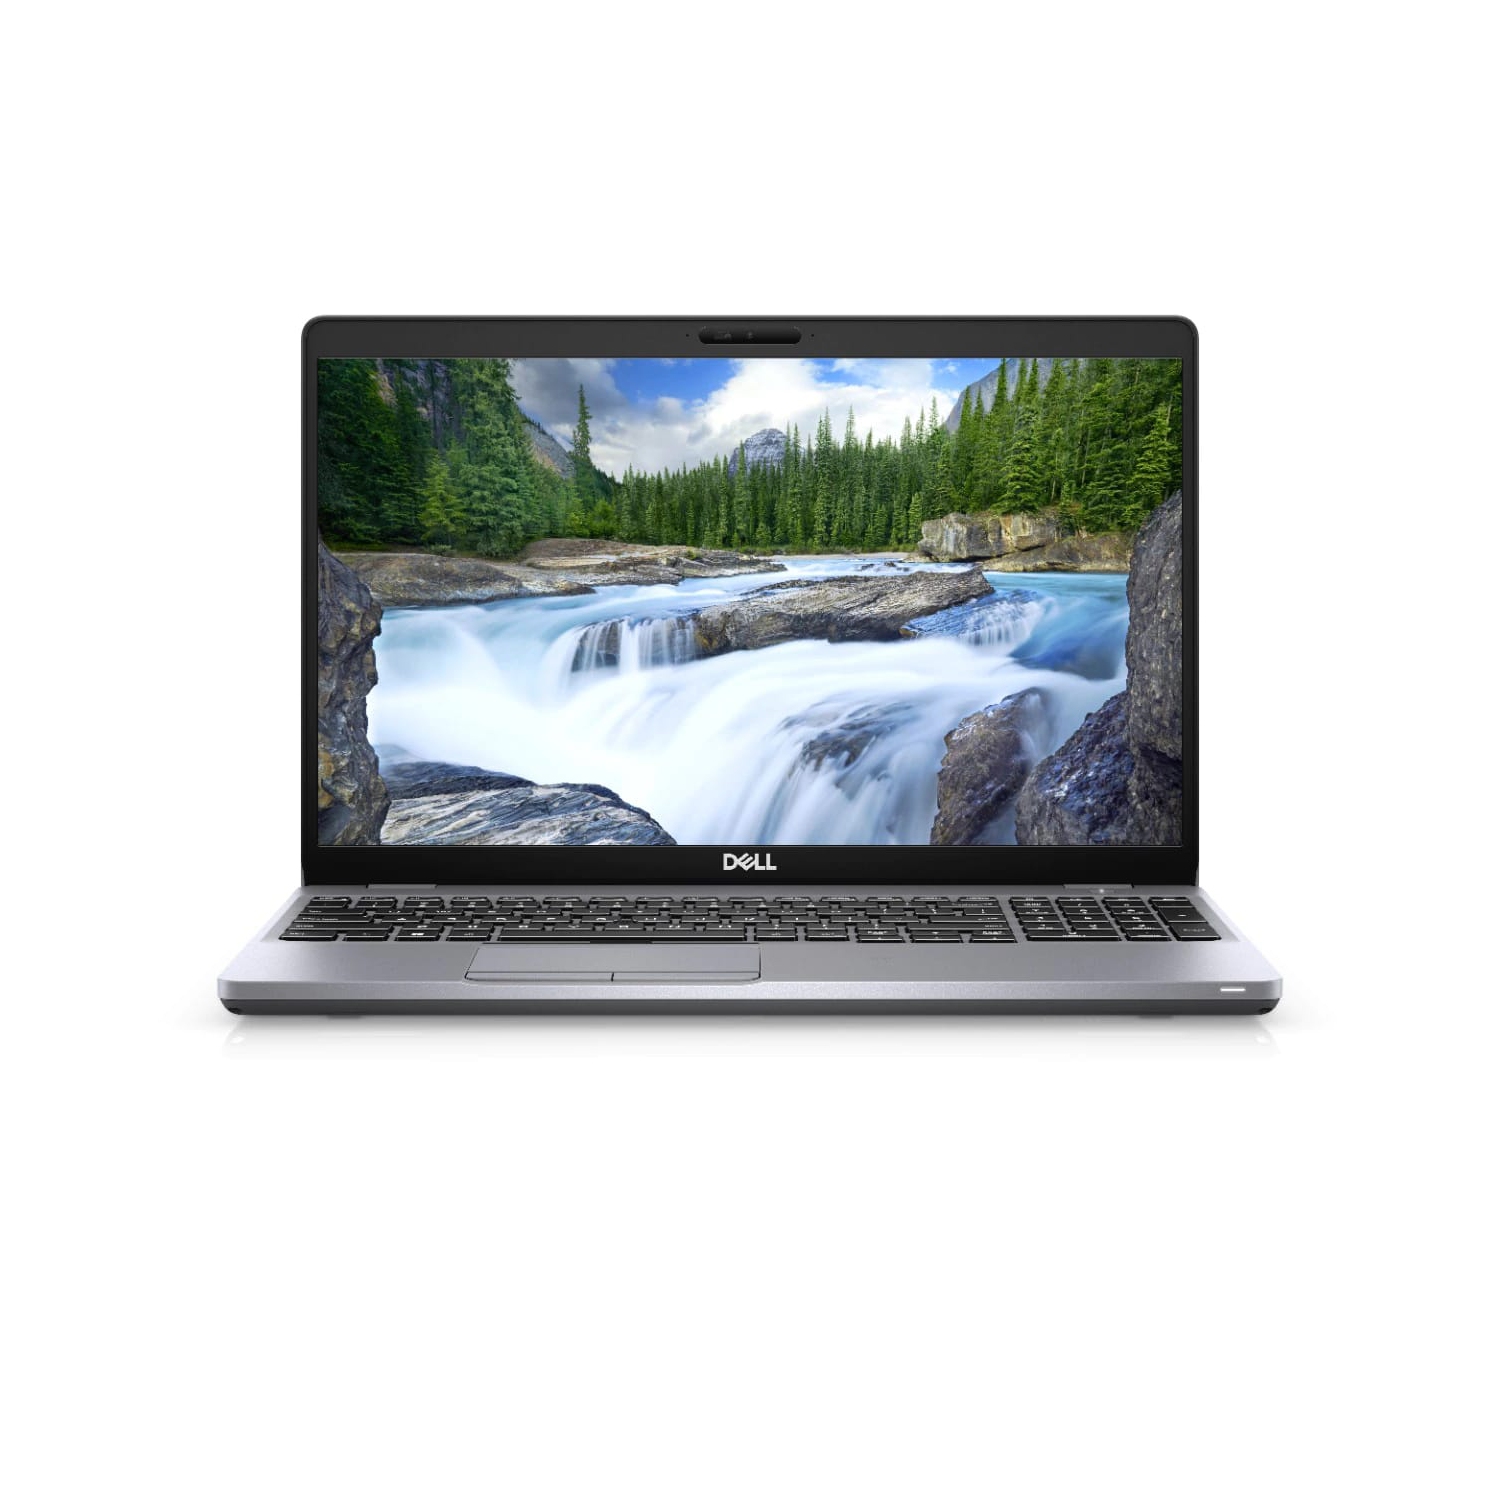 Dell Latitude 5000 5510 Laptop (2020) | 15.6" FHD | Core i5 - 256GB SSD - 8GB RAM | 4 Cores @ 4.2 GHz - 10th Gen CPU